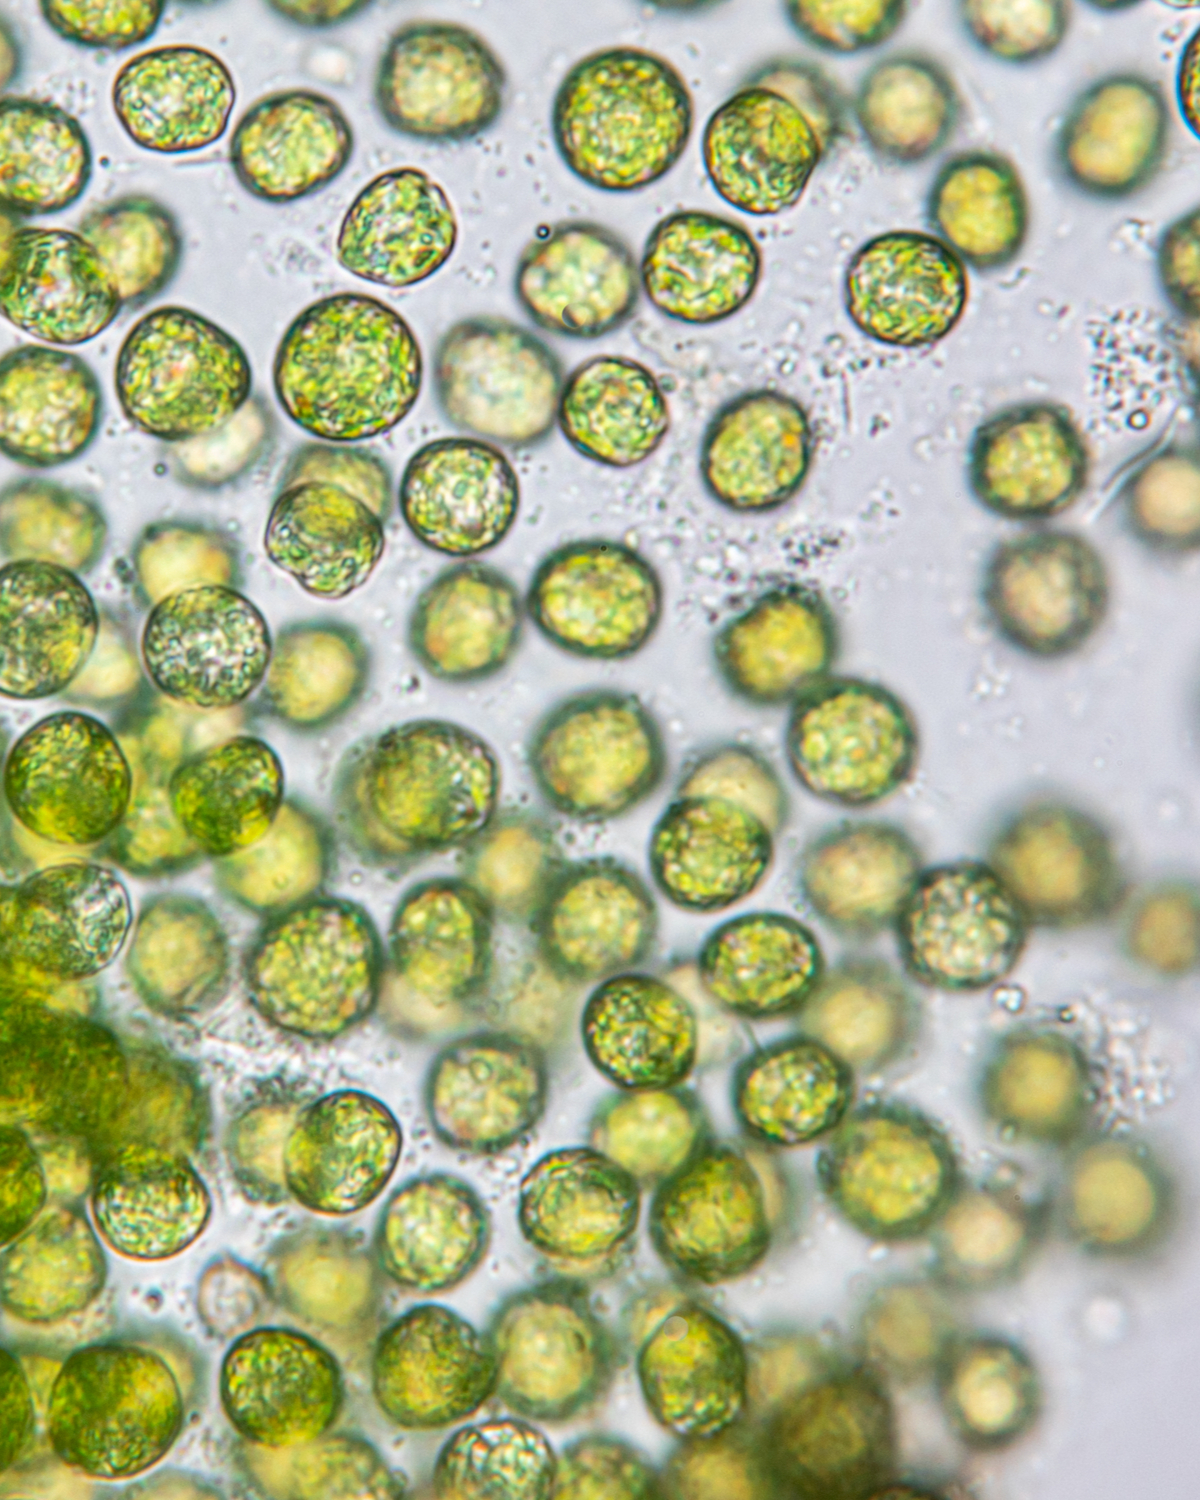 Most Protist species are microscopic, including algae.